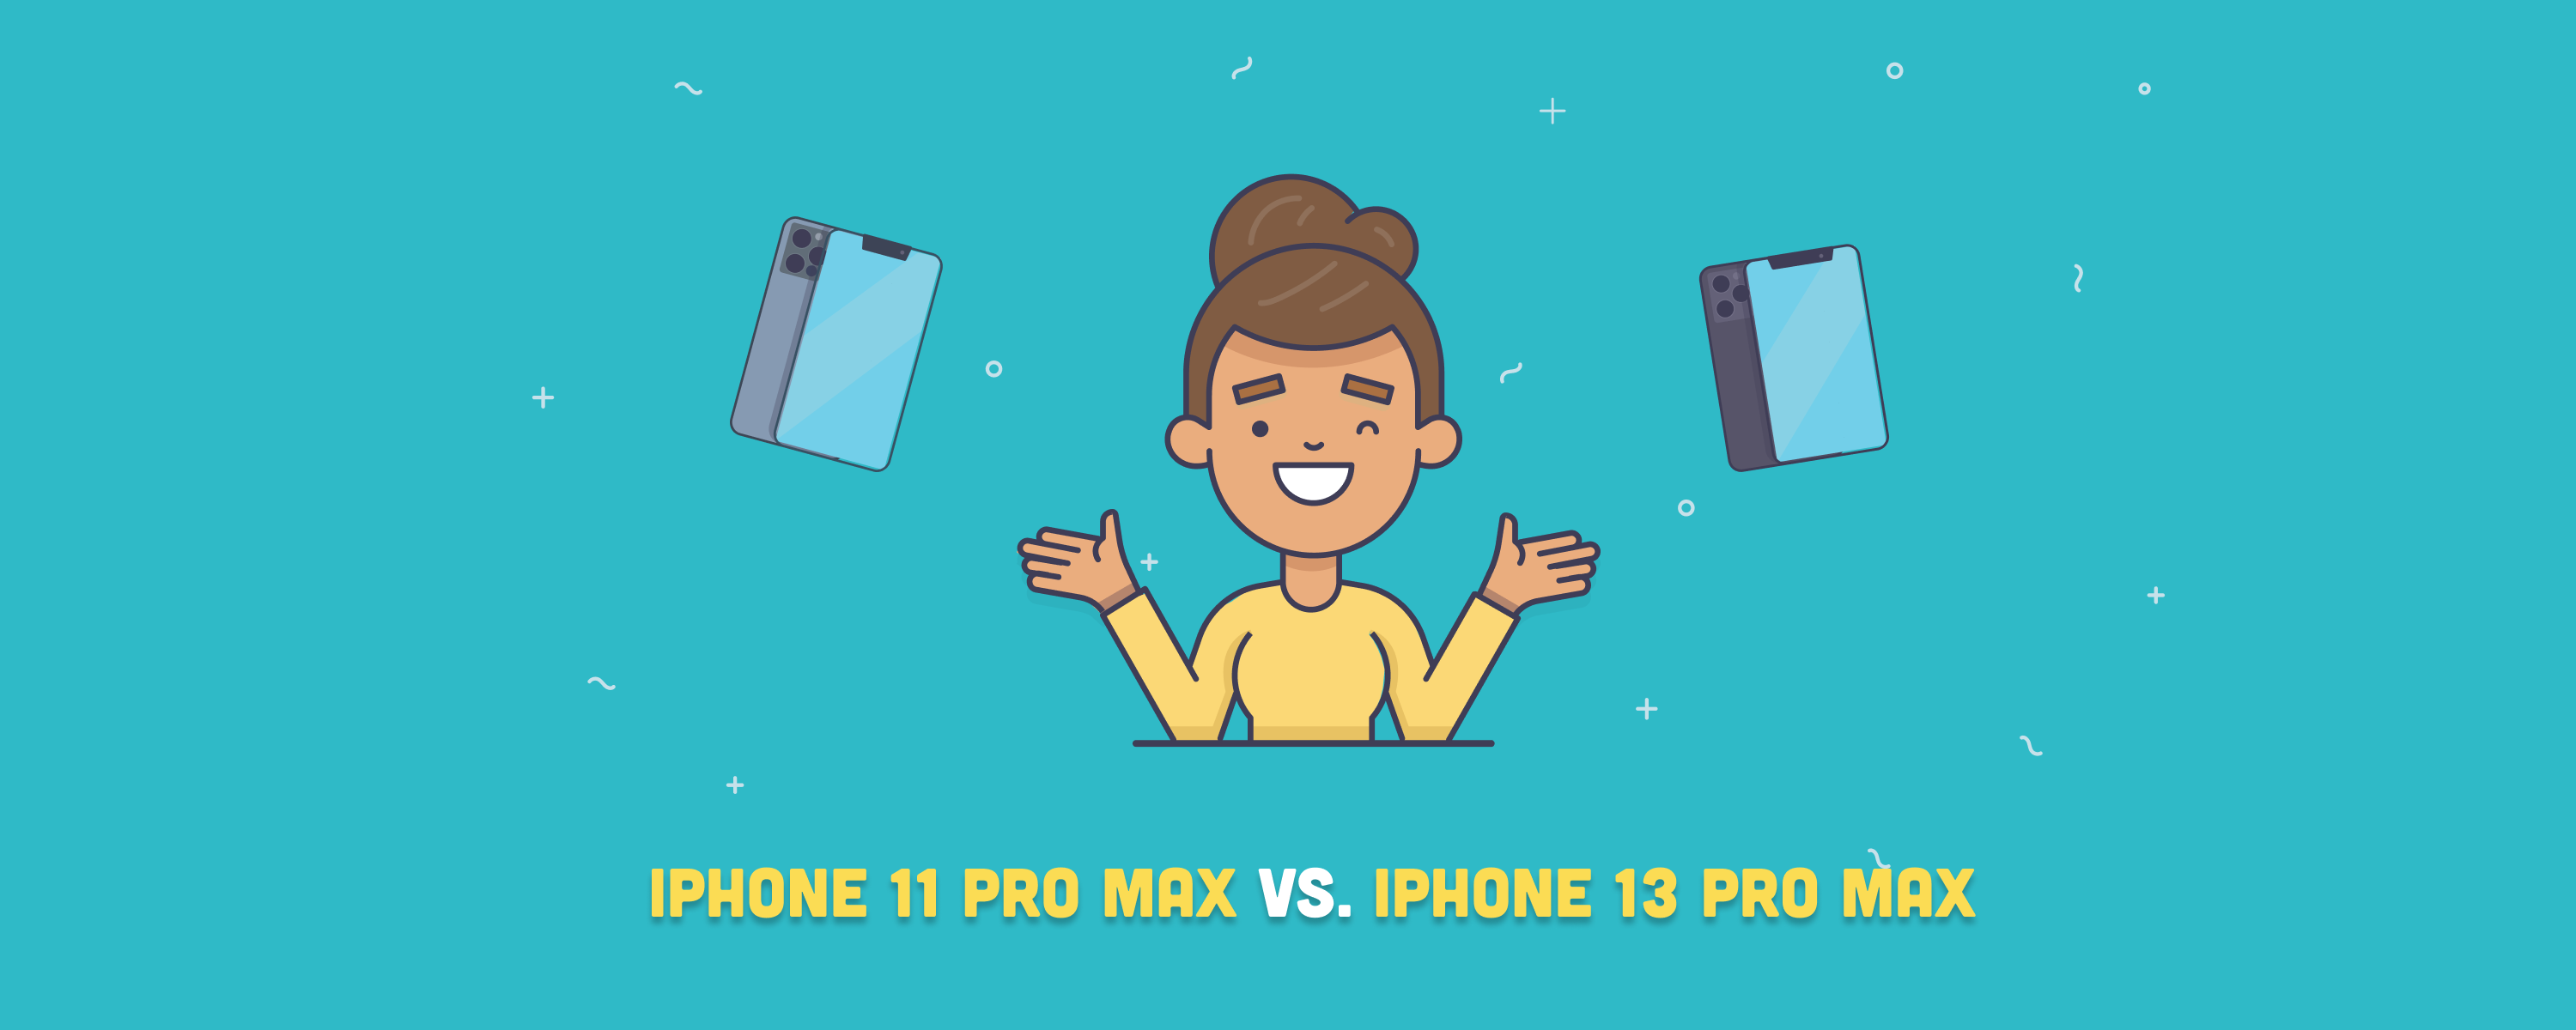 iPhone 11 Pro Max vs iPhone 13 Pro Max: todas las diferencias